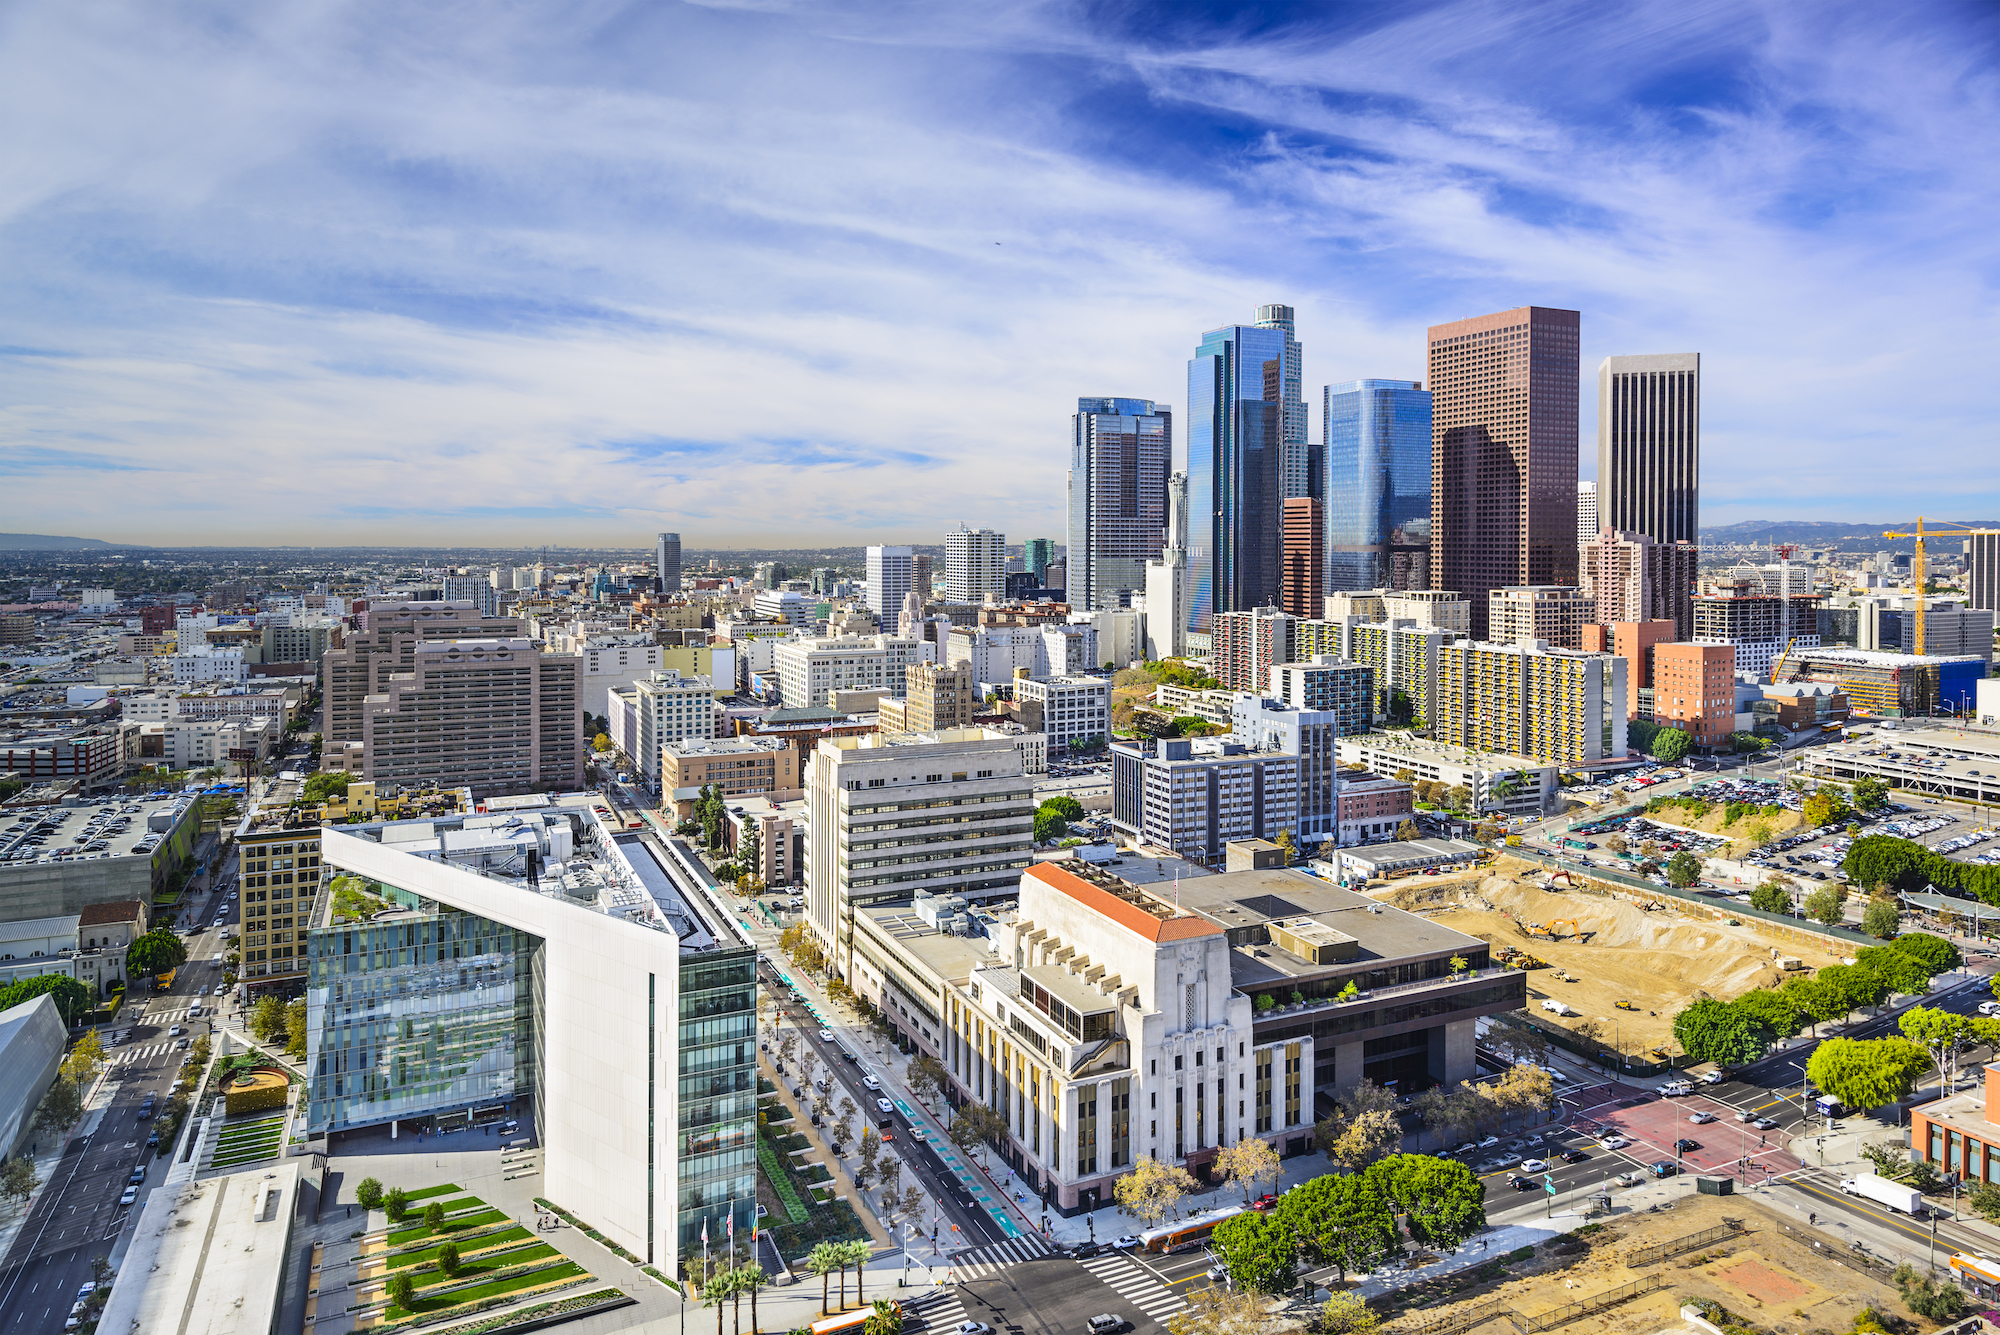 The Los Angeles skyline